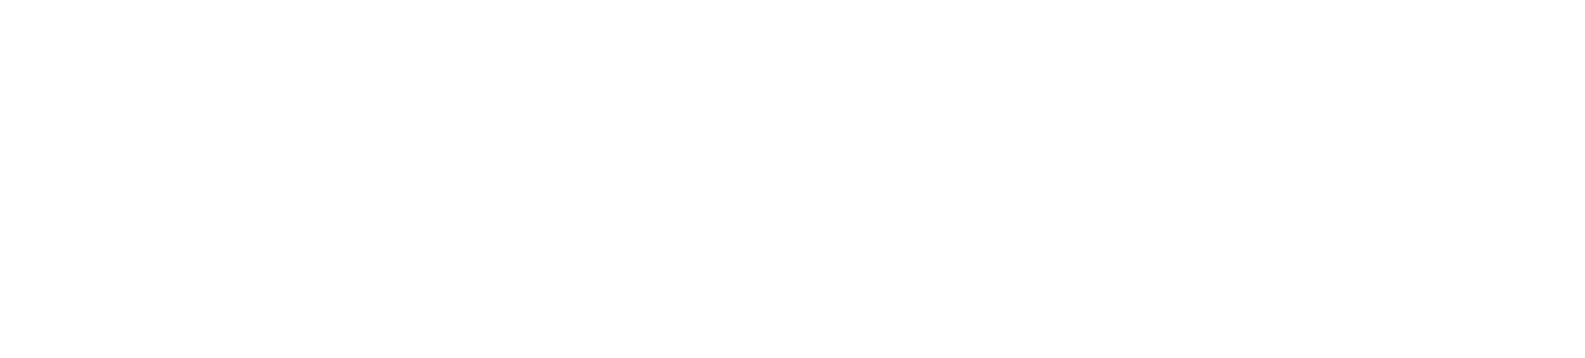 ALBA SE Logo groß für dunkle Hintergründe (transparentes PNG)